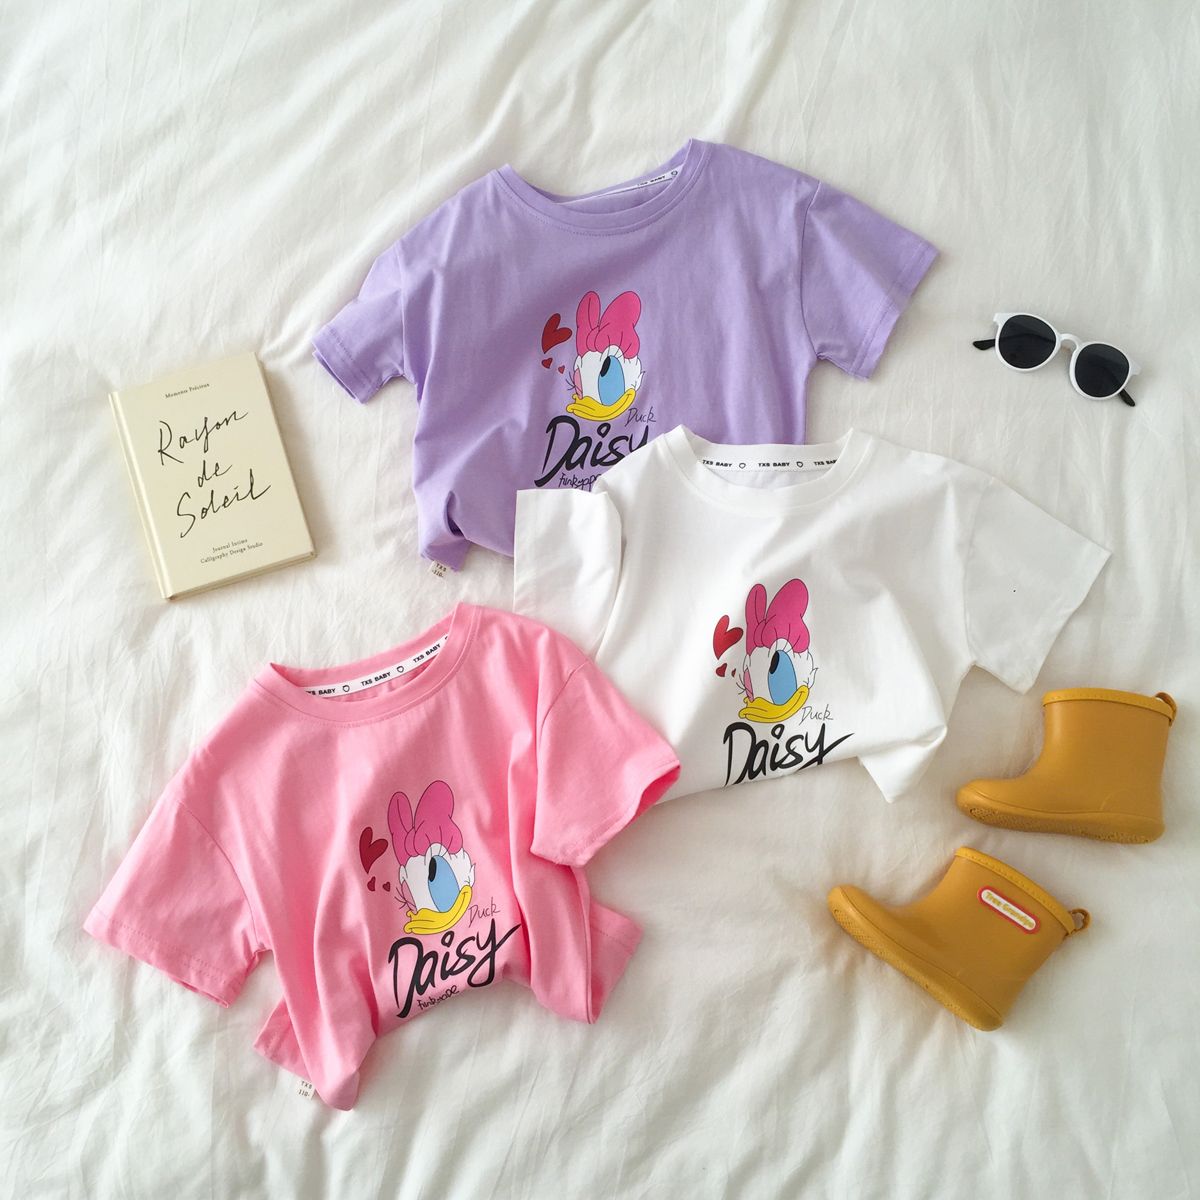 22 new girls' cartoon T-shirt summer baby cool little girl cute T short-sleeved thin section loose top children's clothing